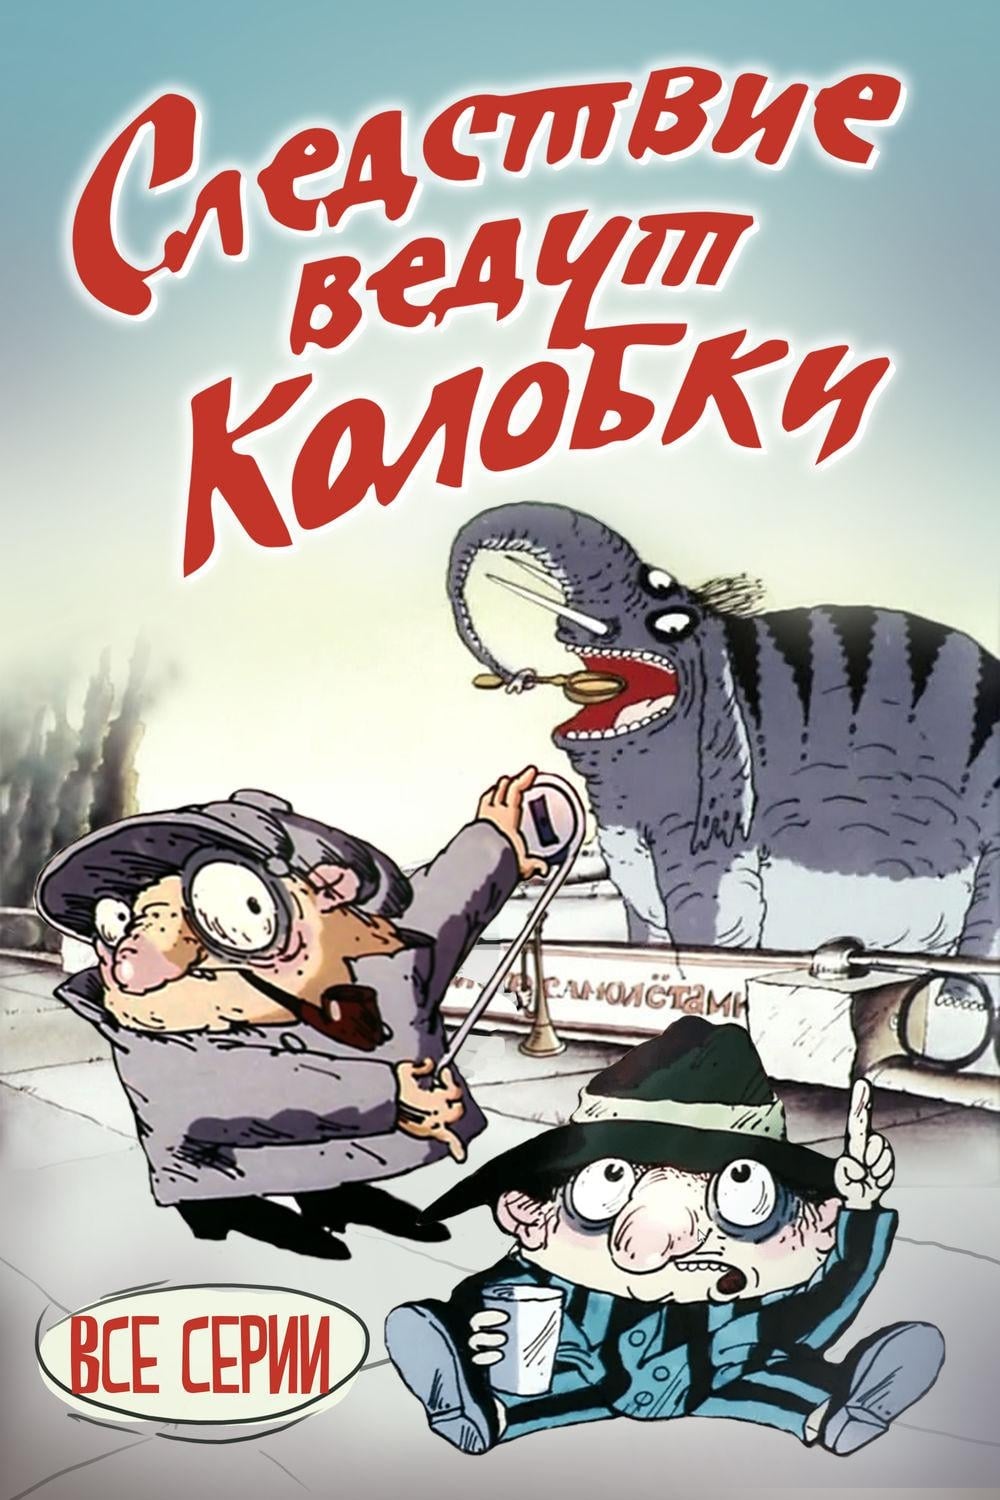 Investigation Held by Kolobki (1986)